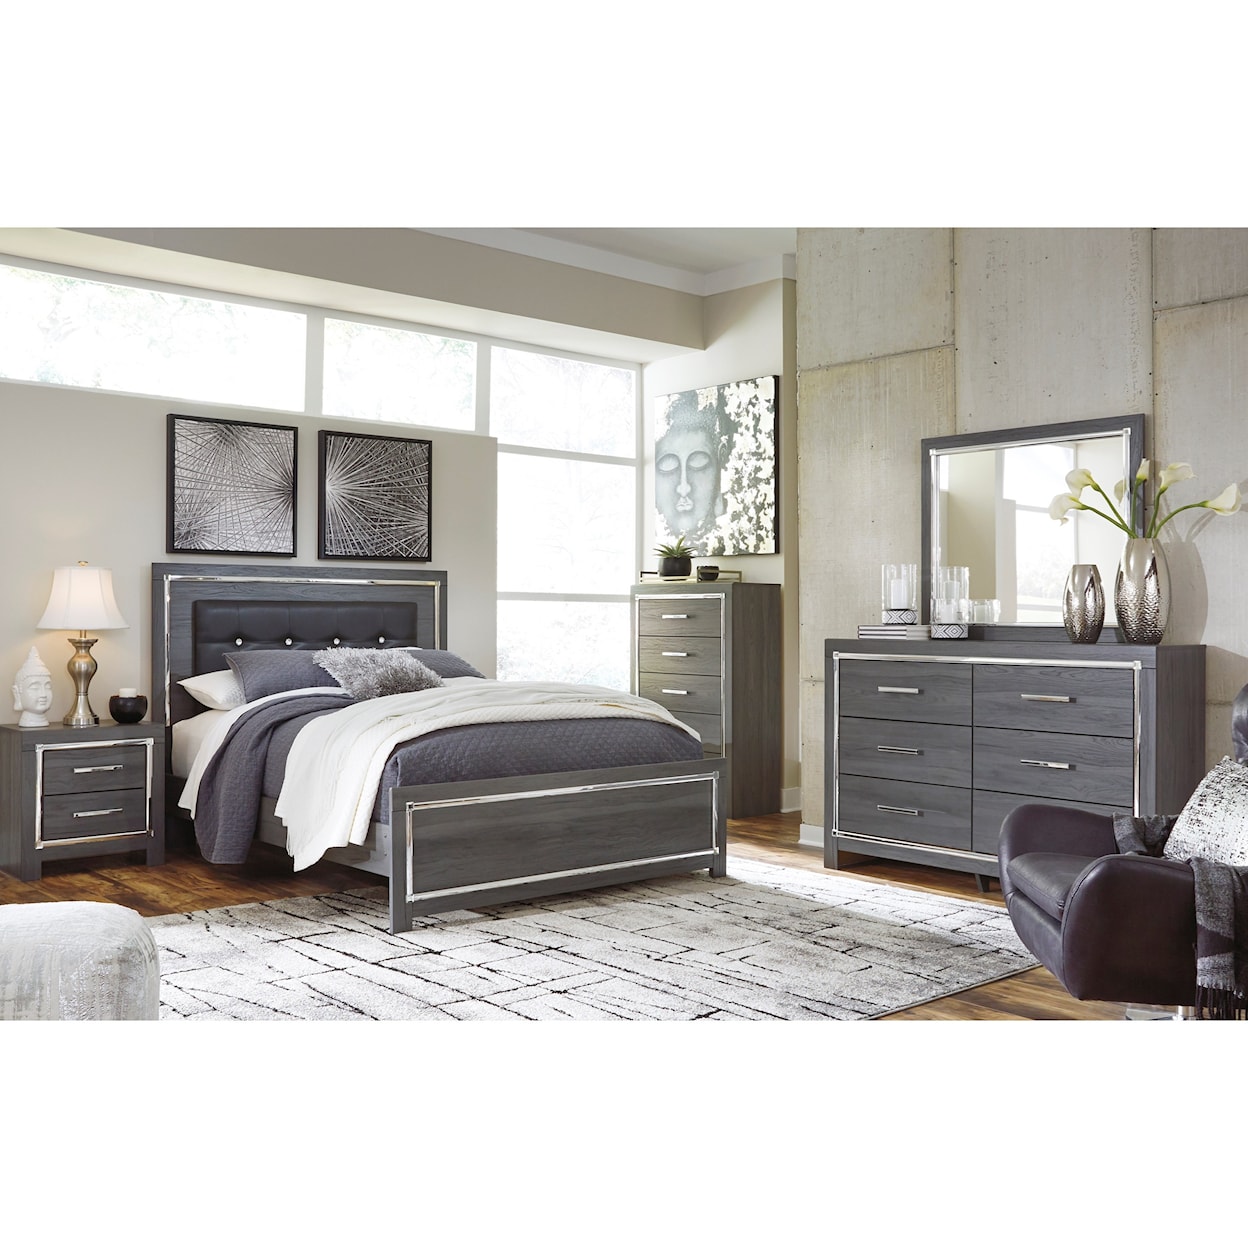 Ashley Furniture Signature Design Lodanna Full Bedroom Group